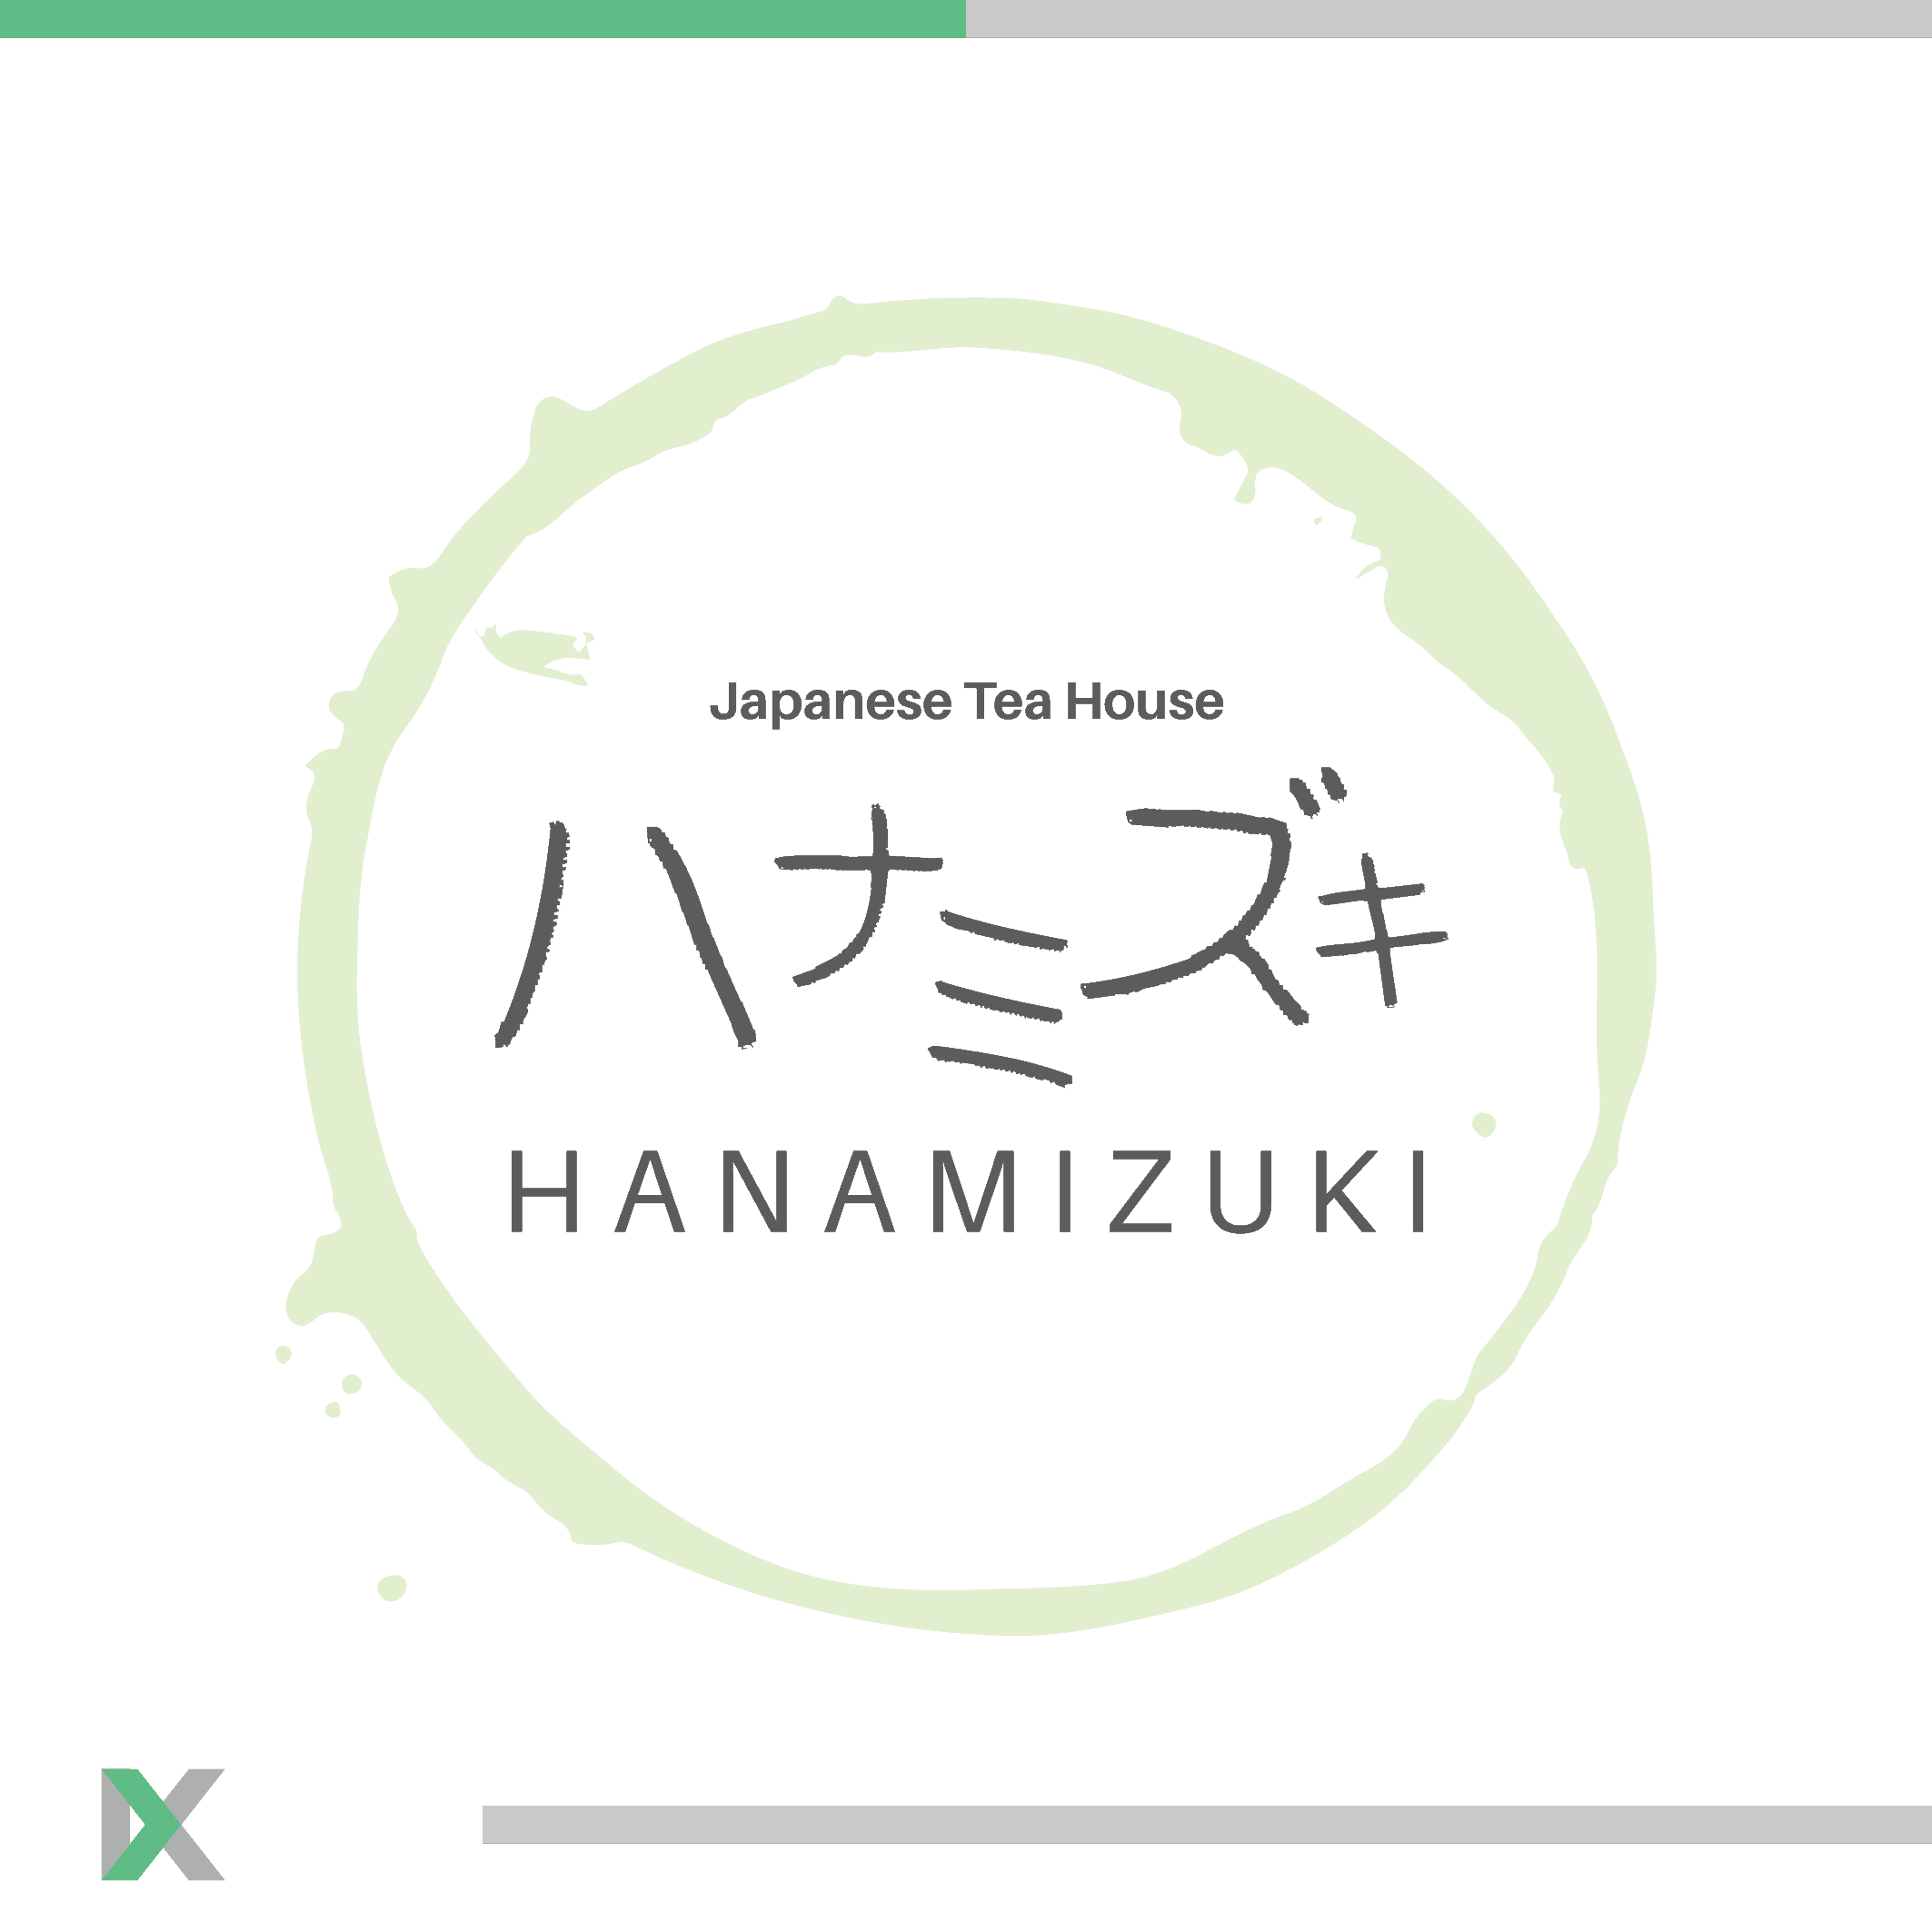 Hanamizuki logo malaysia